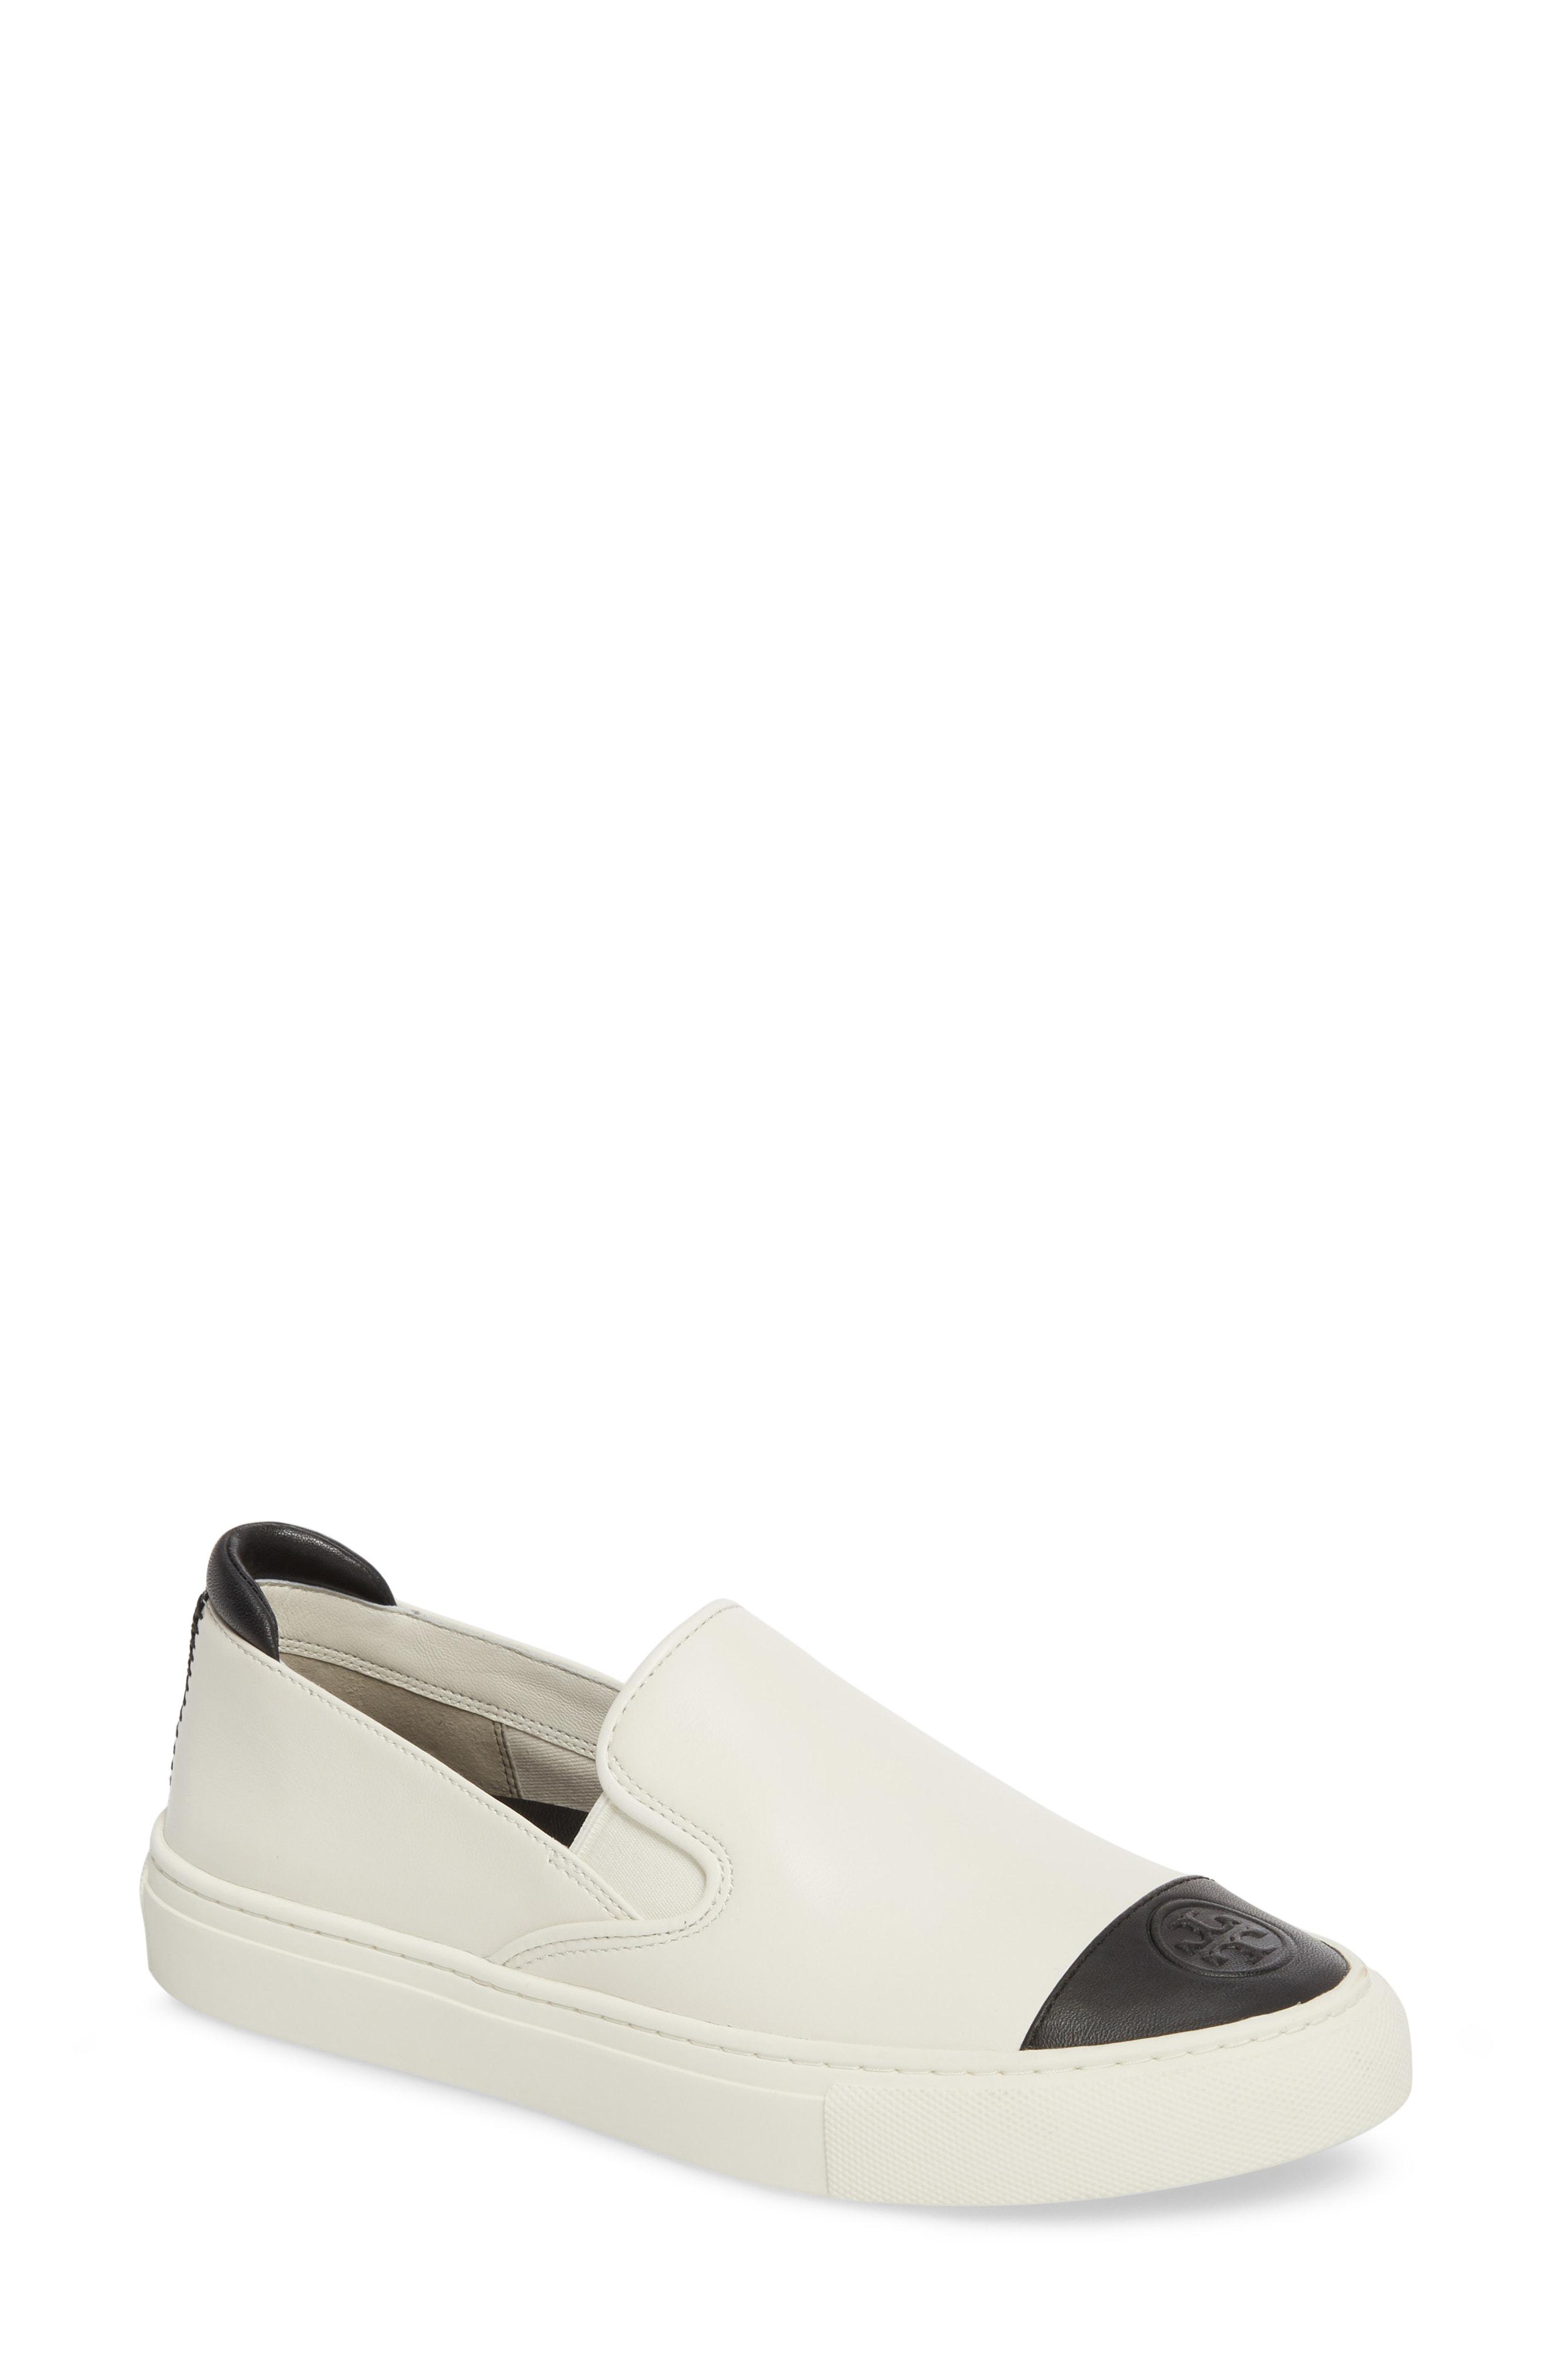 Lyst - Tory Burch Colorblock Slip-on Sneaker in White